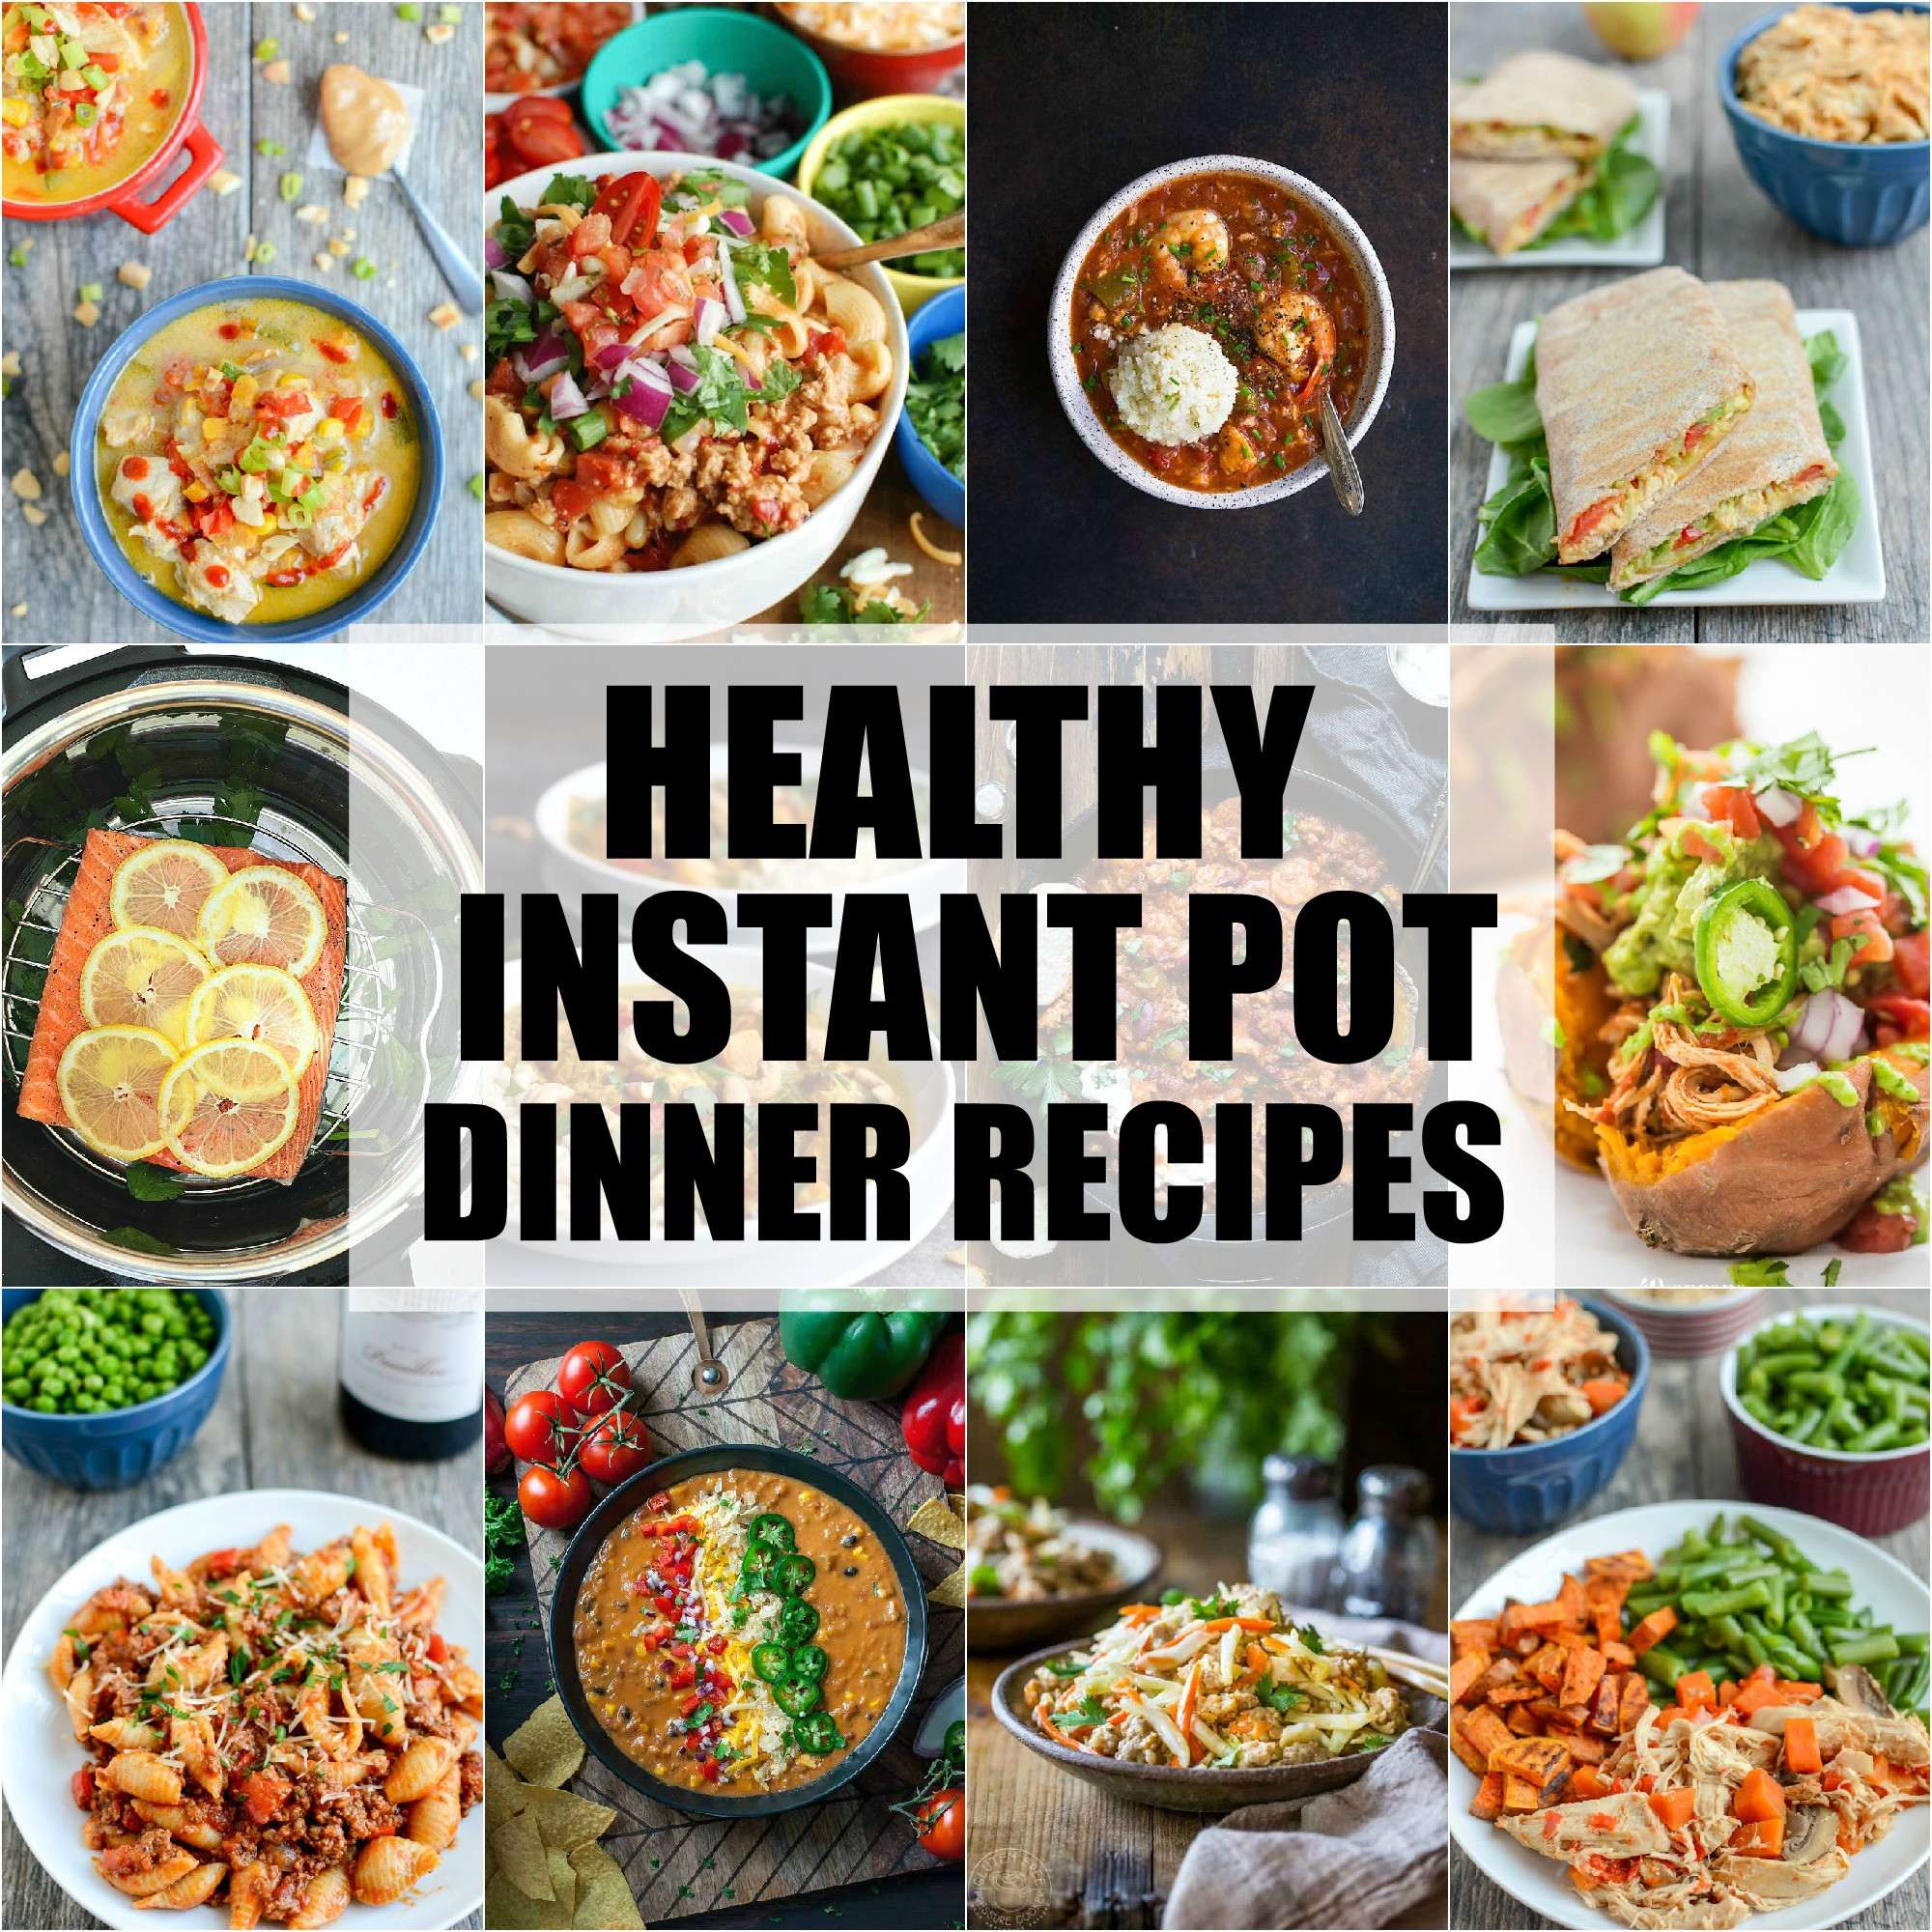 Easy Healthy Instant Pot Recipes
 Healthy Instant Pot Dinner Recipes